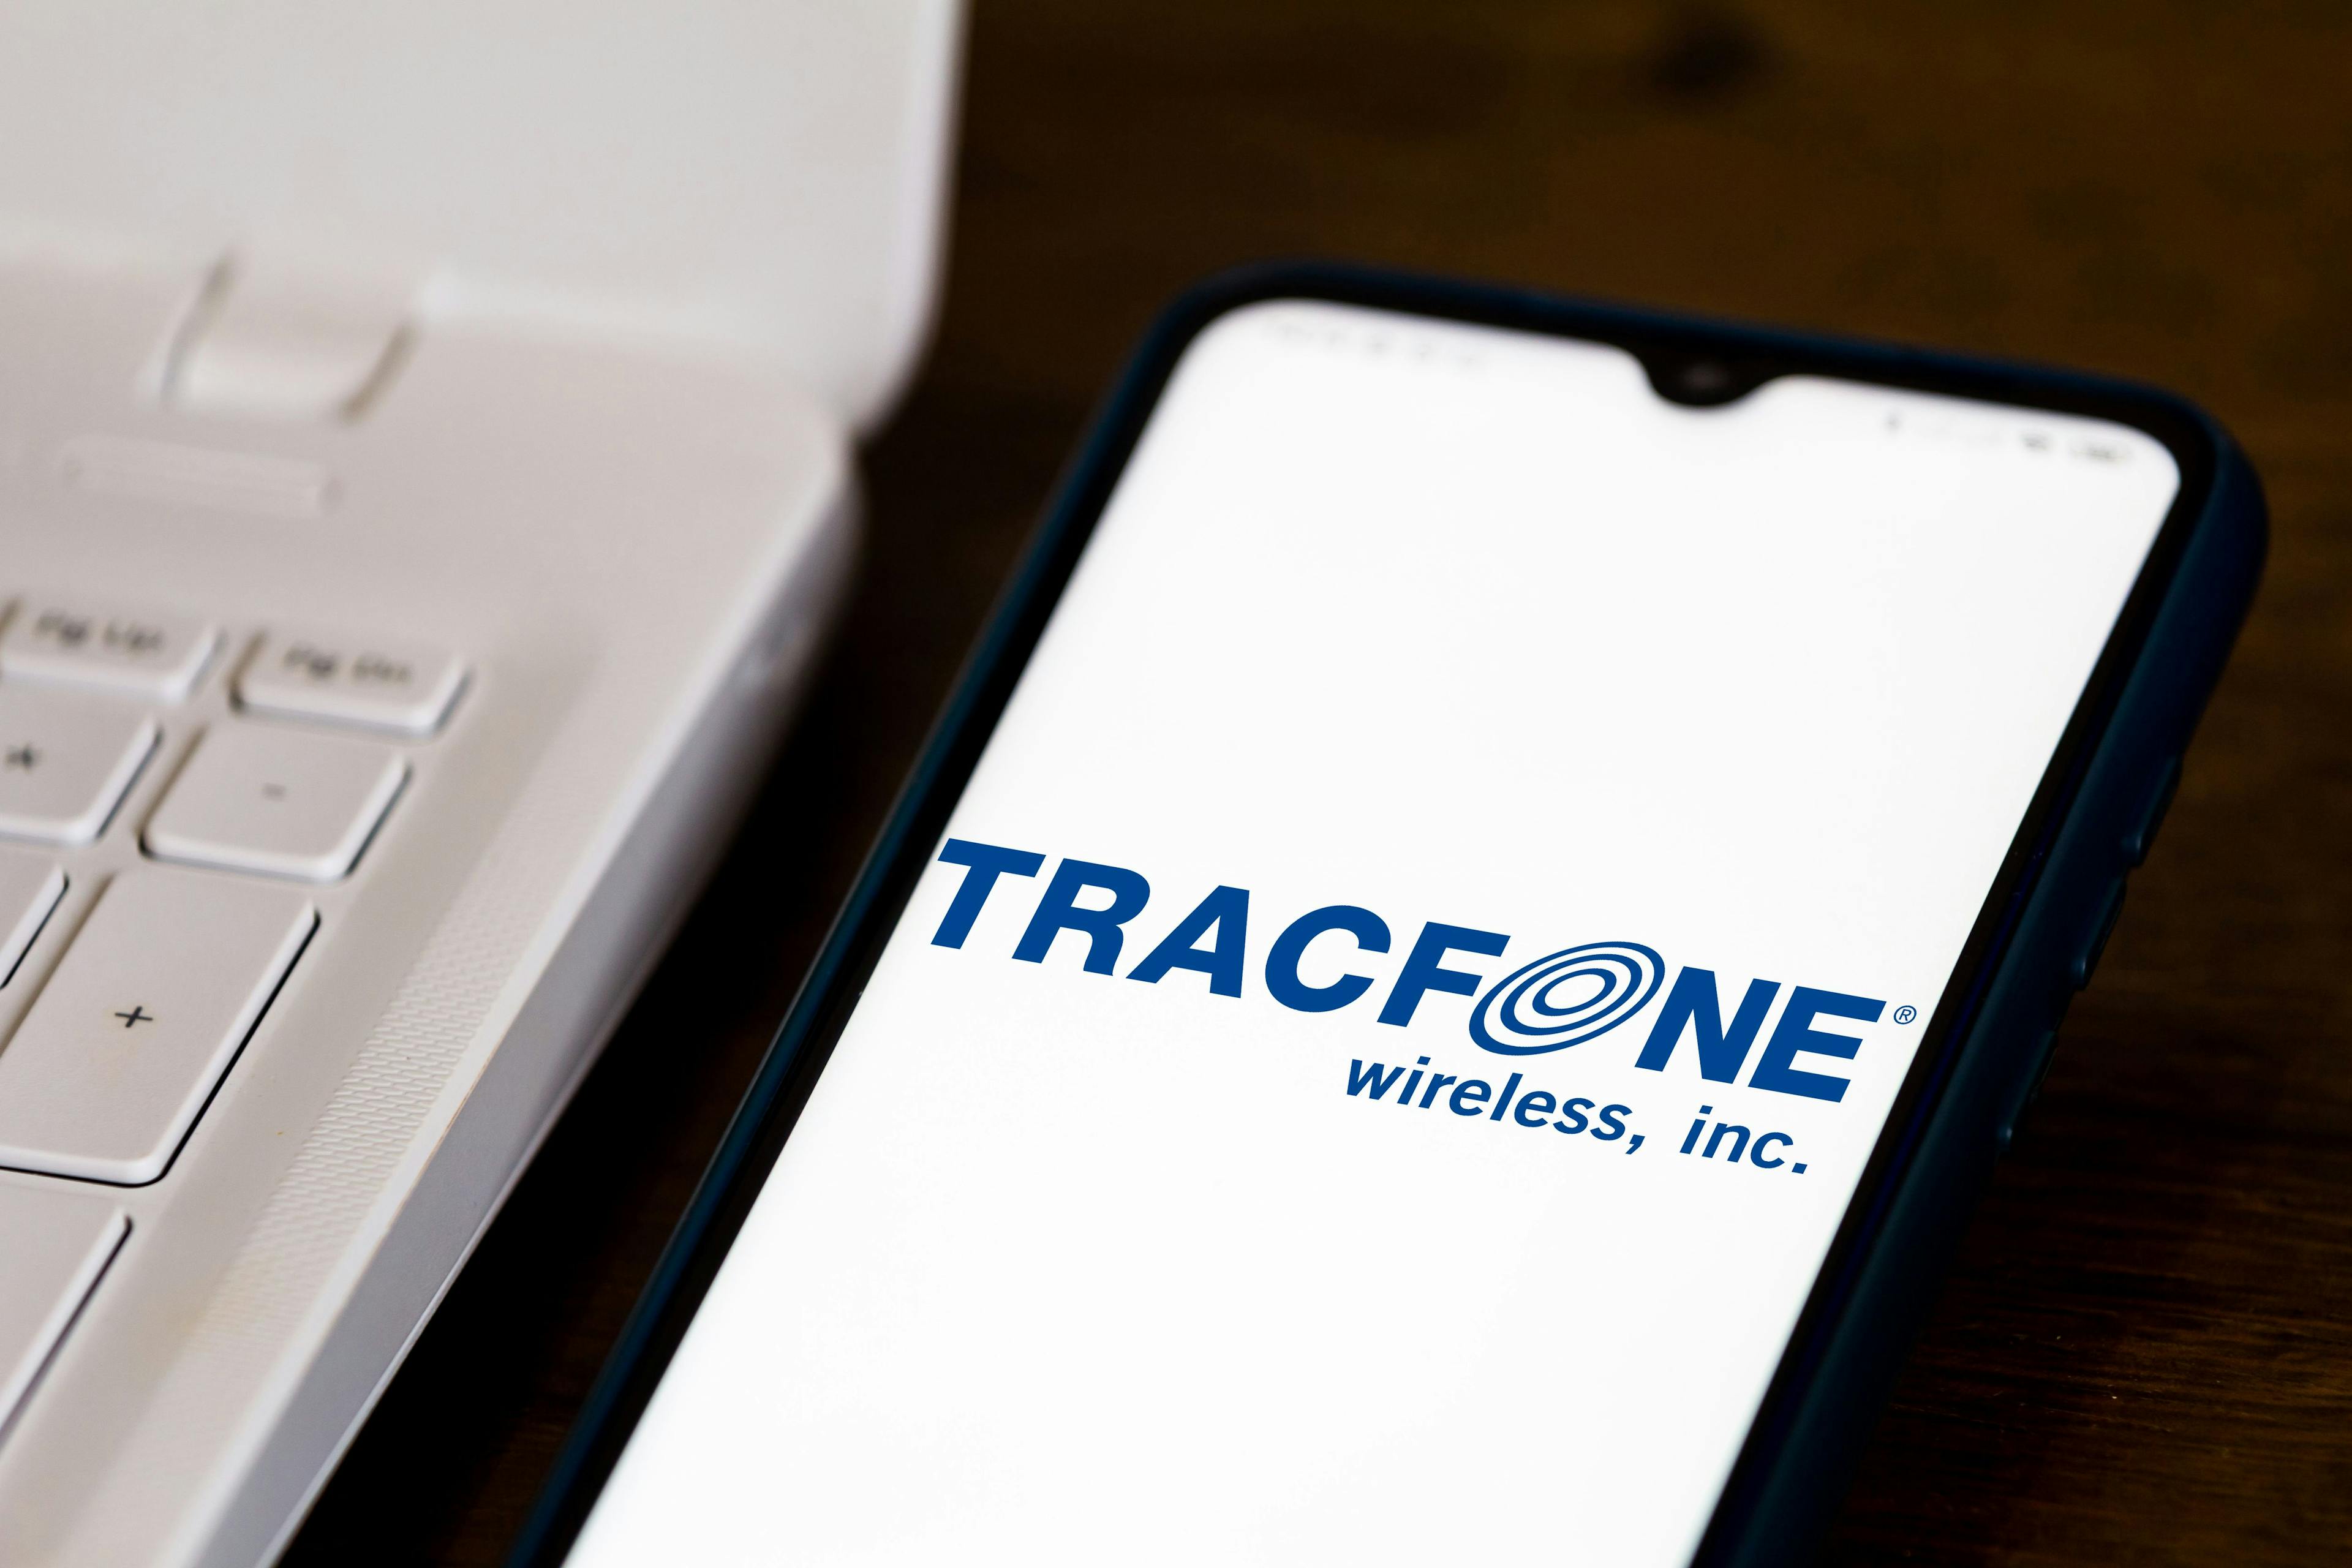 TracFone logo on a phone screen.